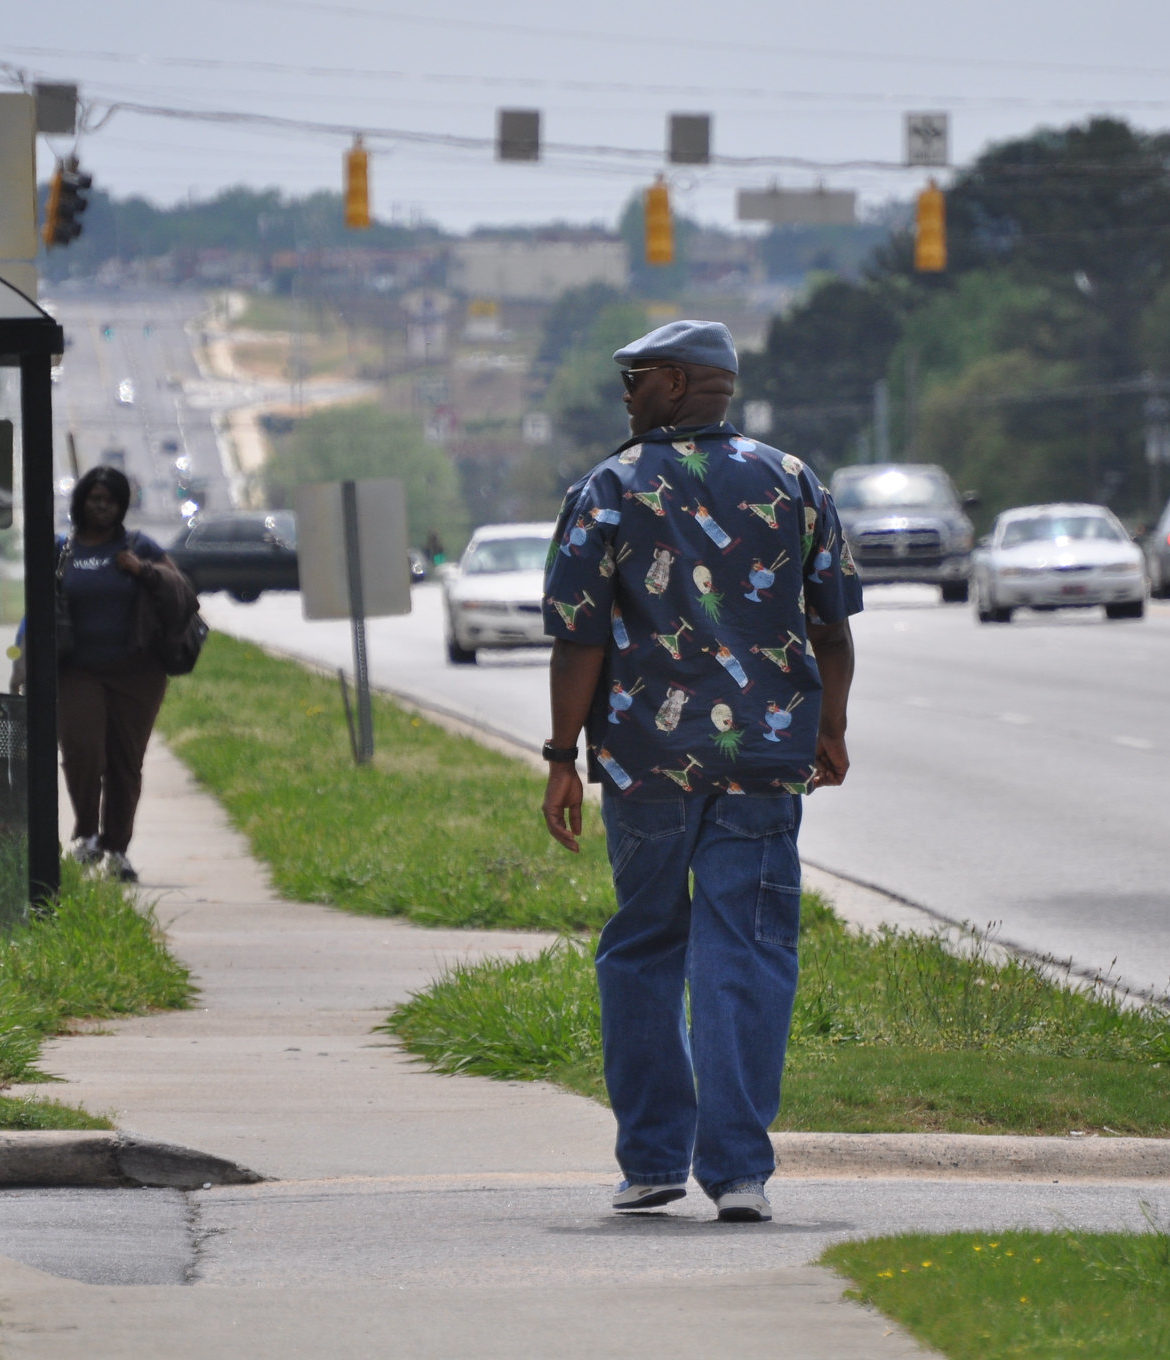 A Black man walks to a bus stop along a multi-lane highway